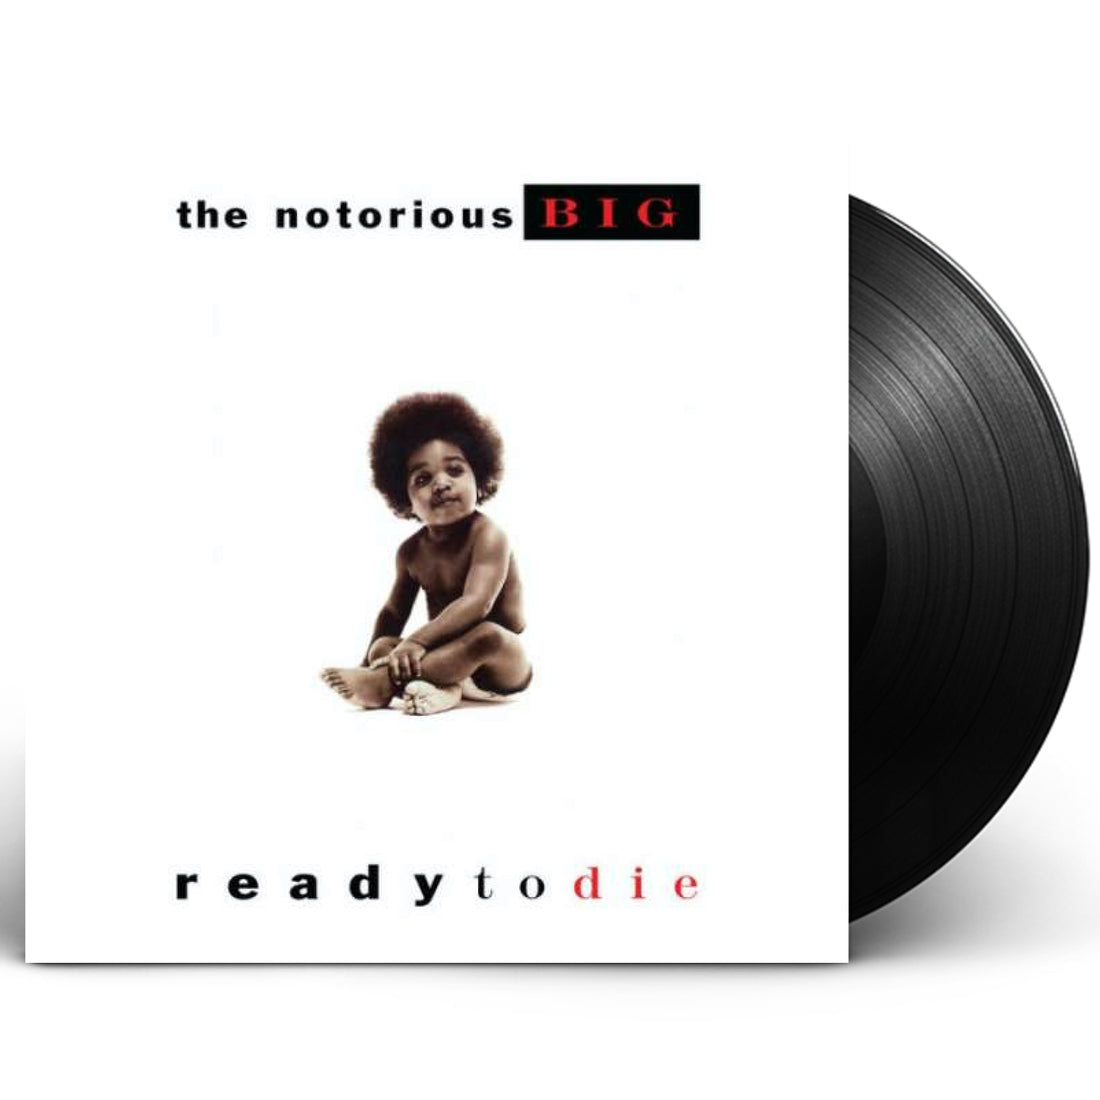 The Notorious B.I.G. "Ready to Die" 2xLP Vinyl